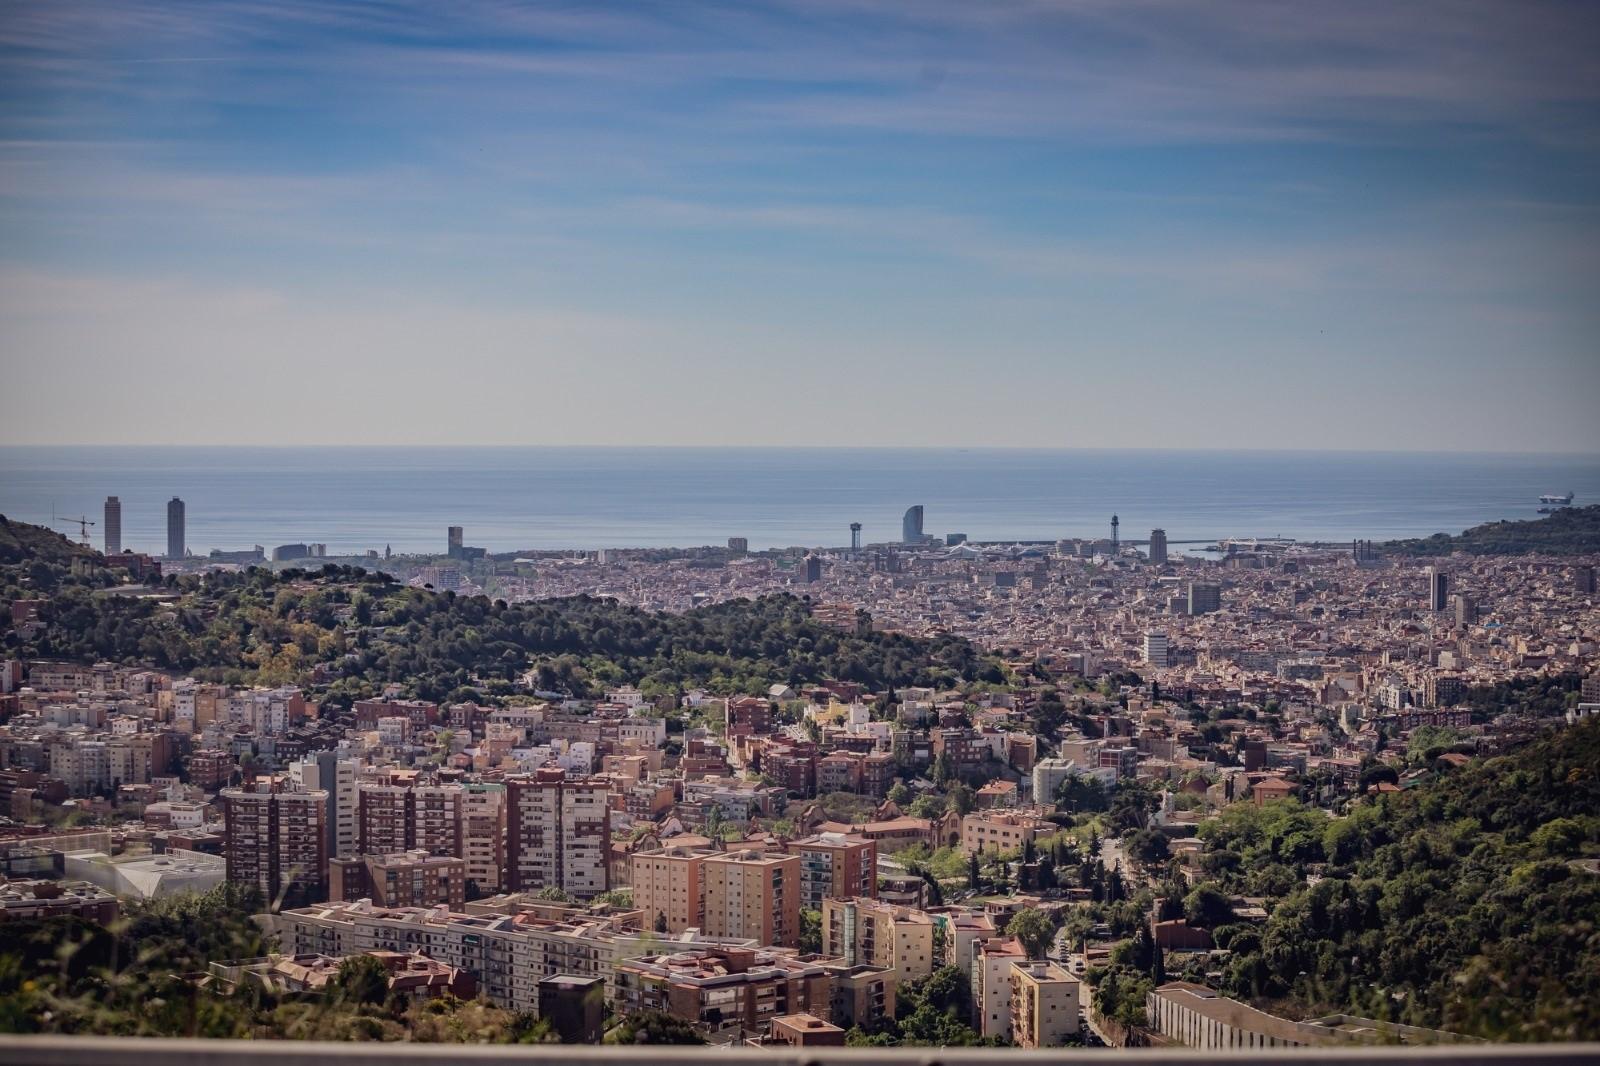  Imagen de Barcelona, capital de Cataluña